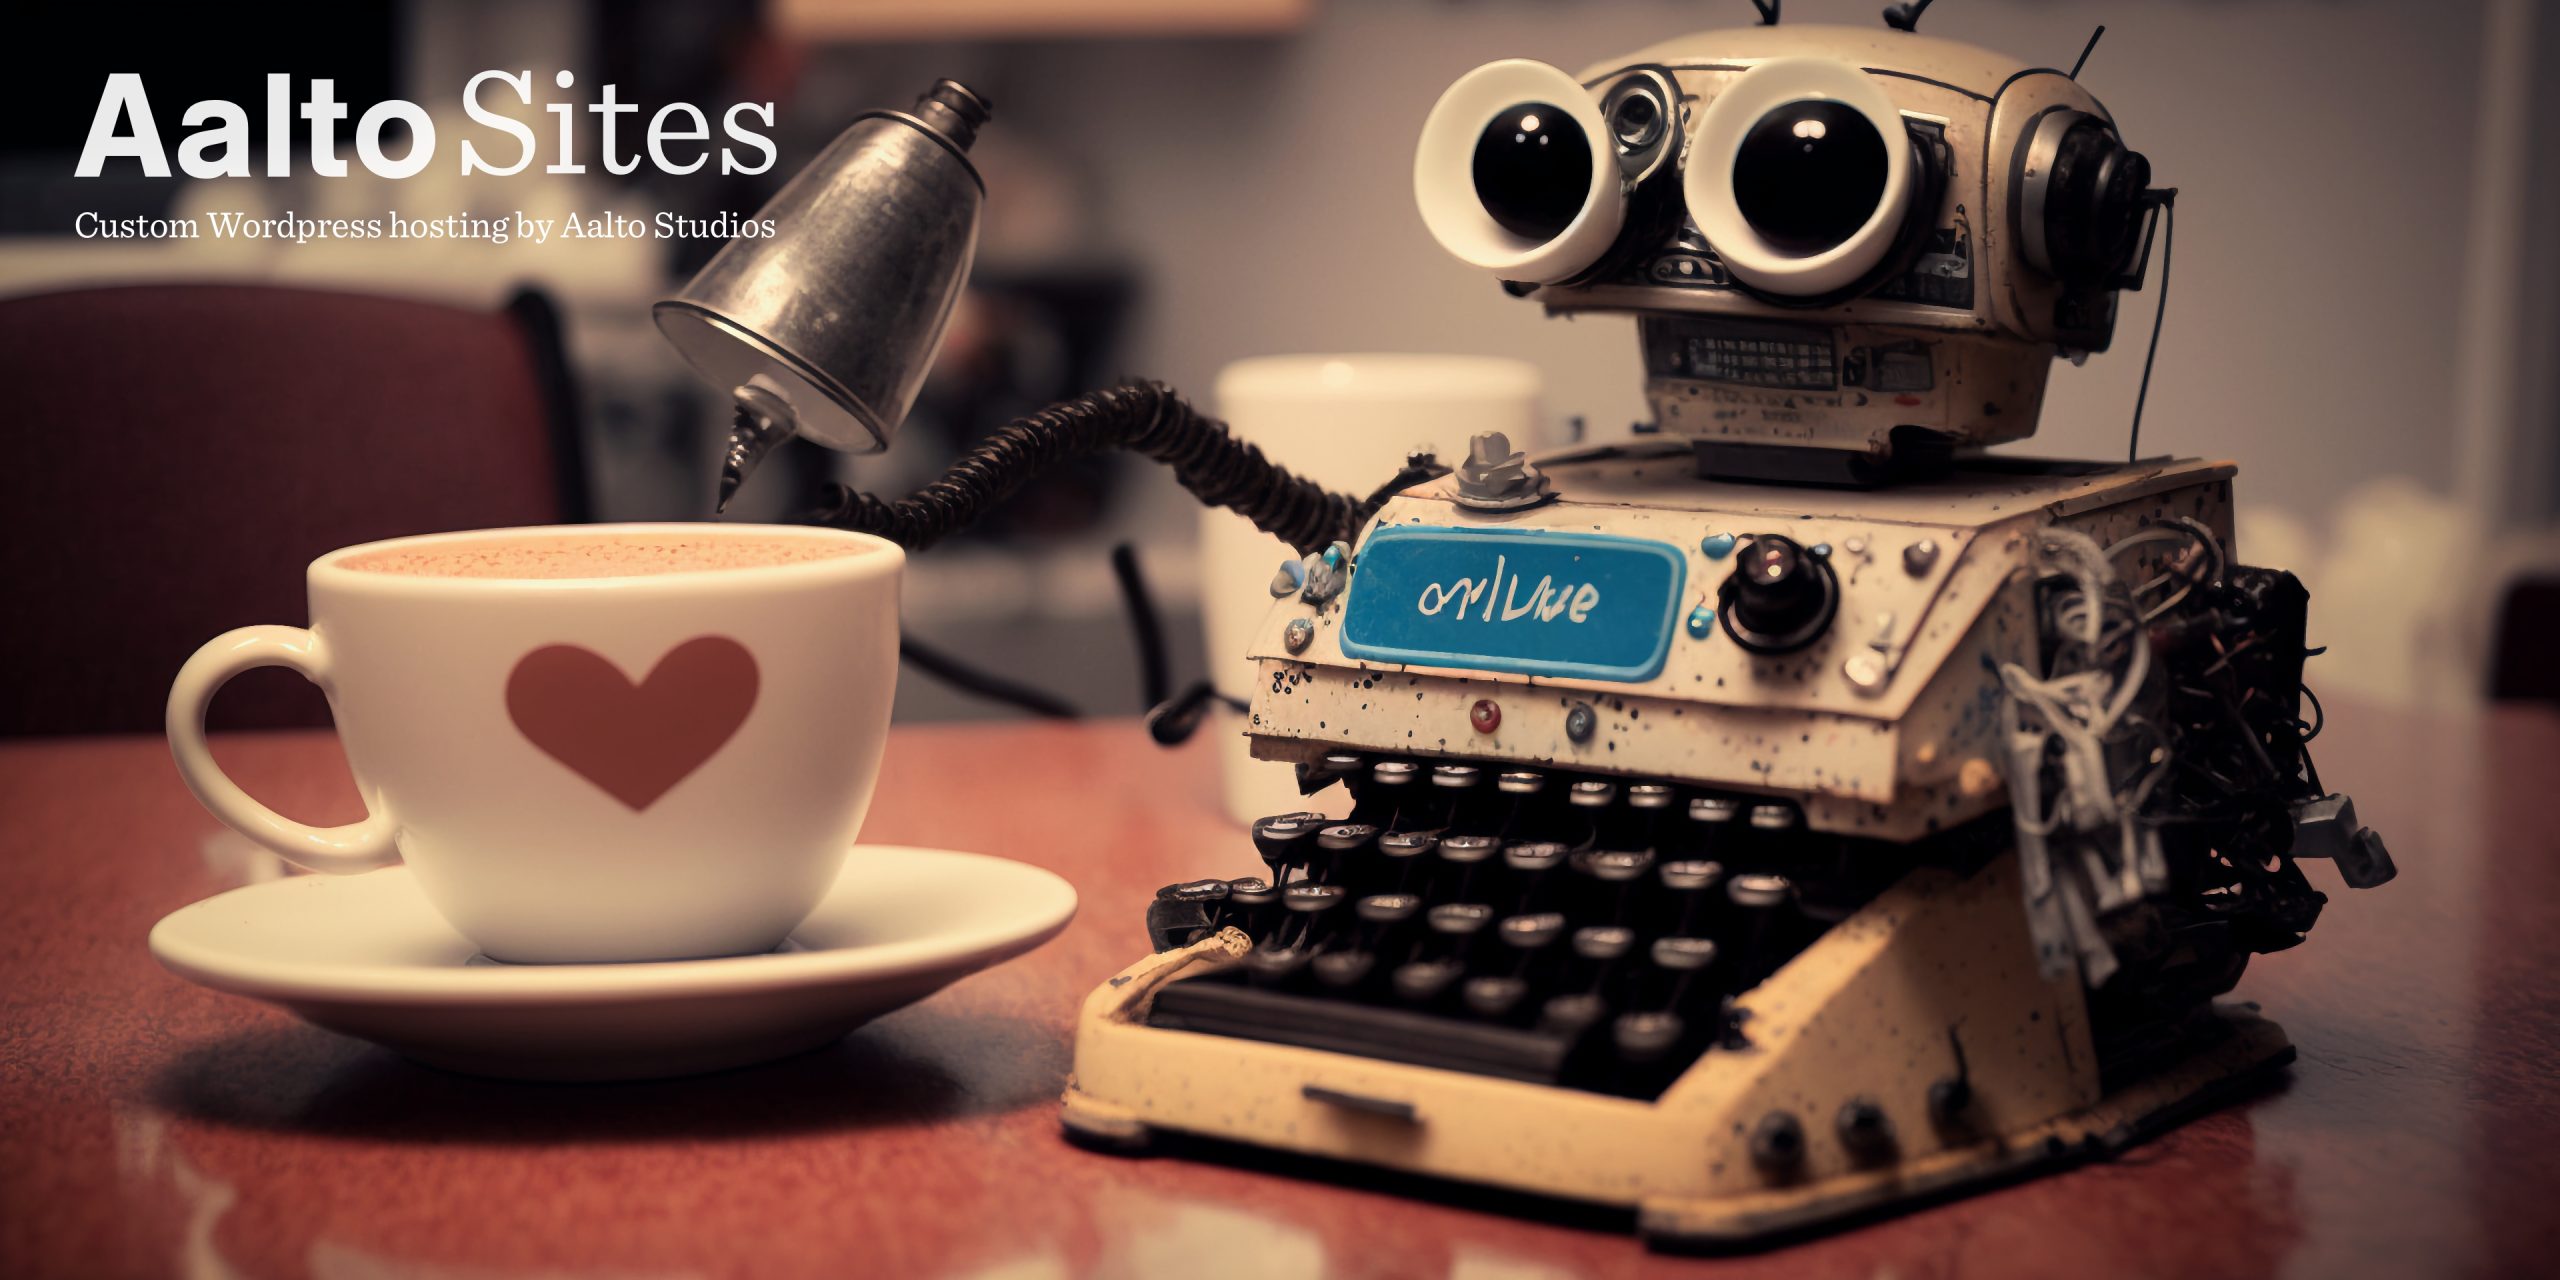 A typewriter robot about to enjoy some coffee